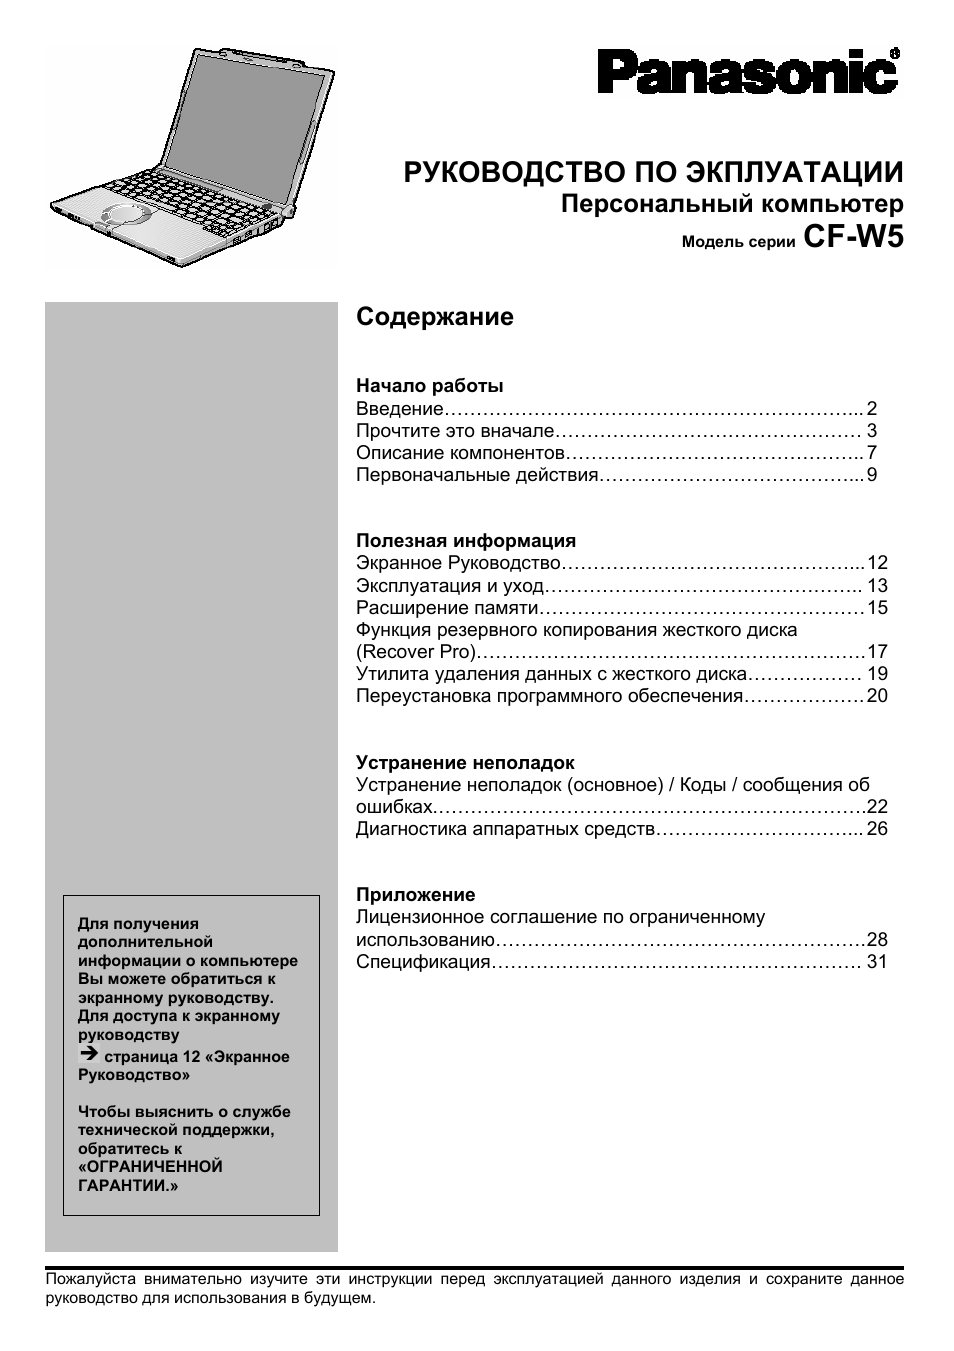 Инструкция по эксплуатации Panasonic CF-W5 | 35 страниц